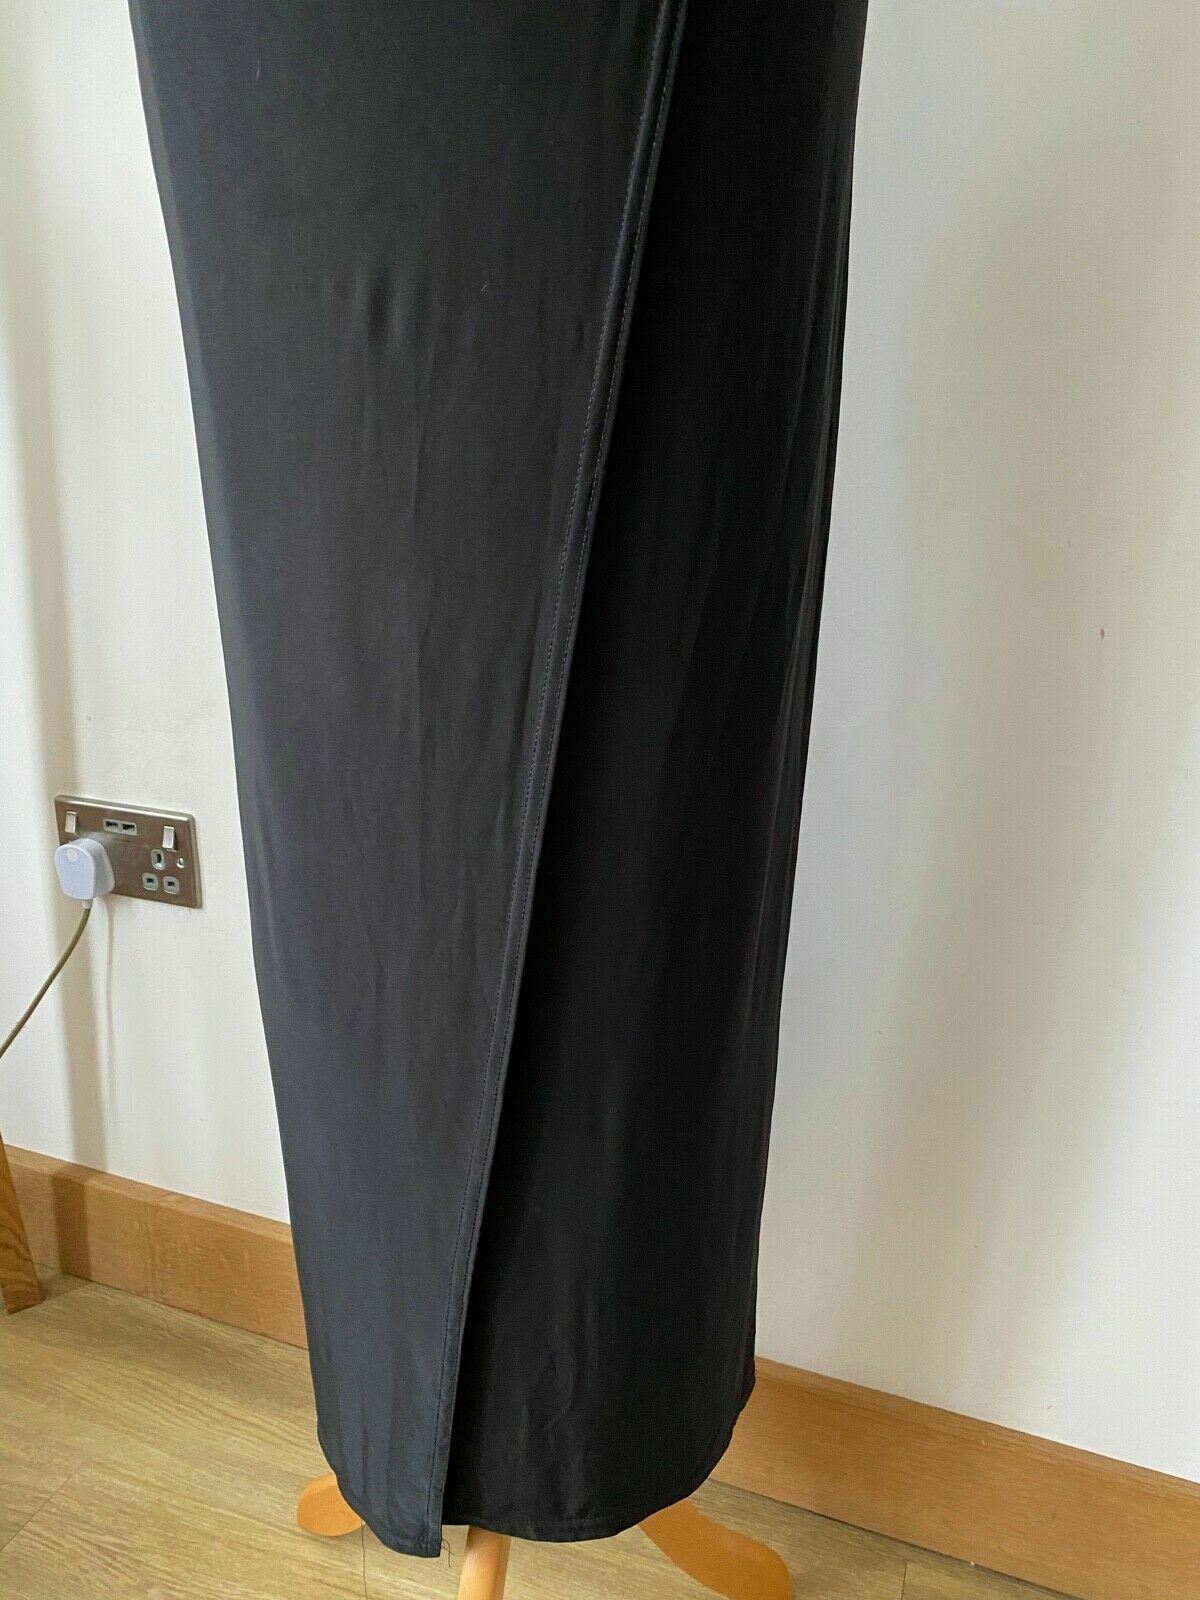 Black Cross Over Faux Wrap Midi Dress Size 10